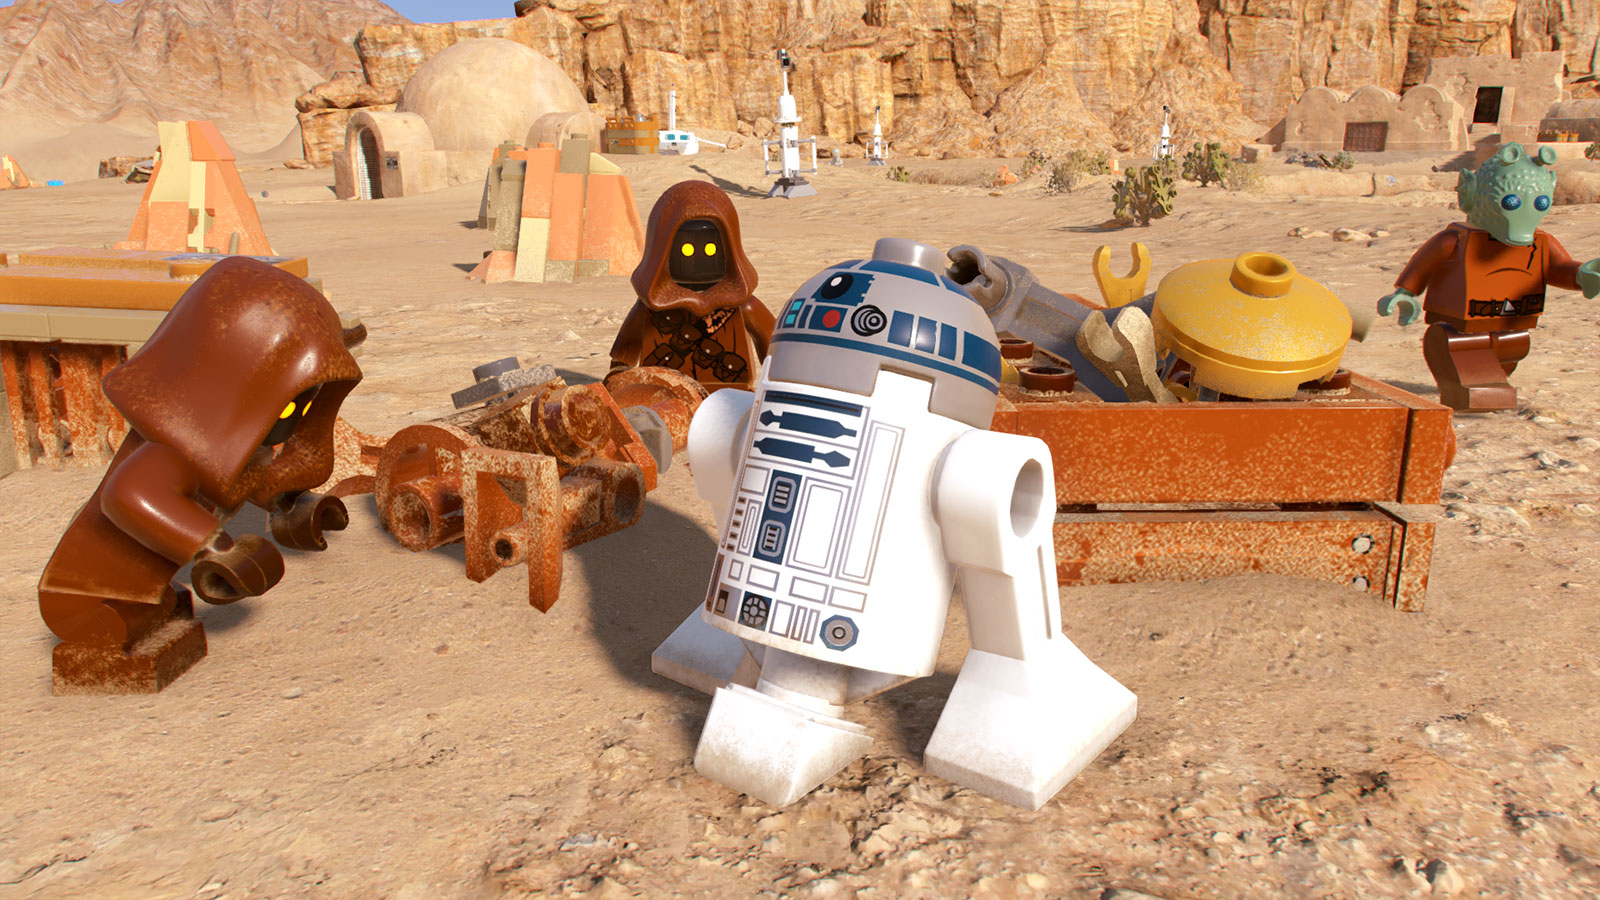 How to claim pre-order bonuses in Lego Star Wars: The Skywalker Saga